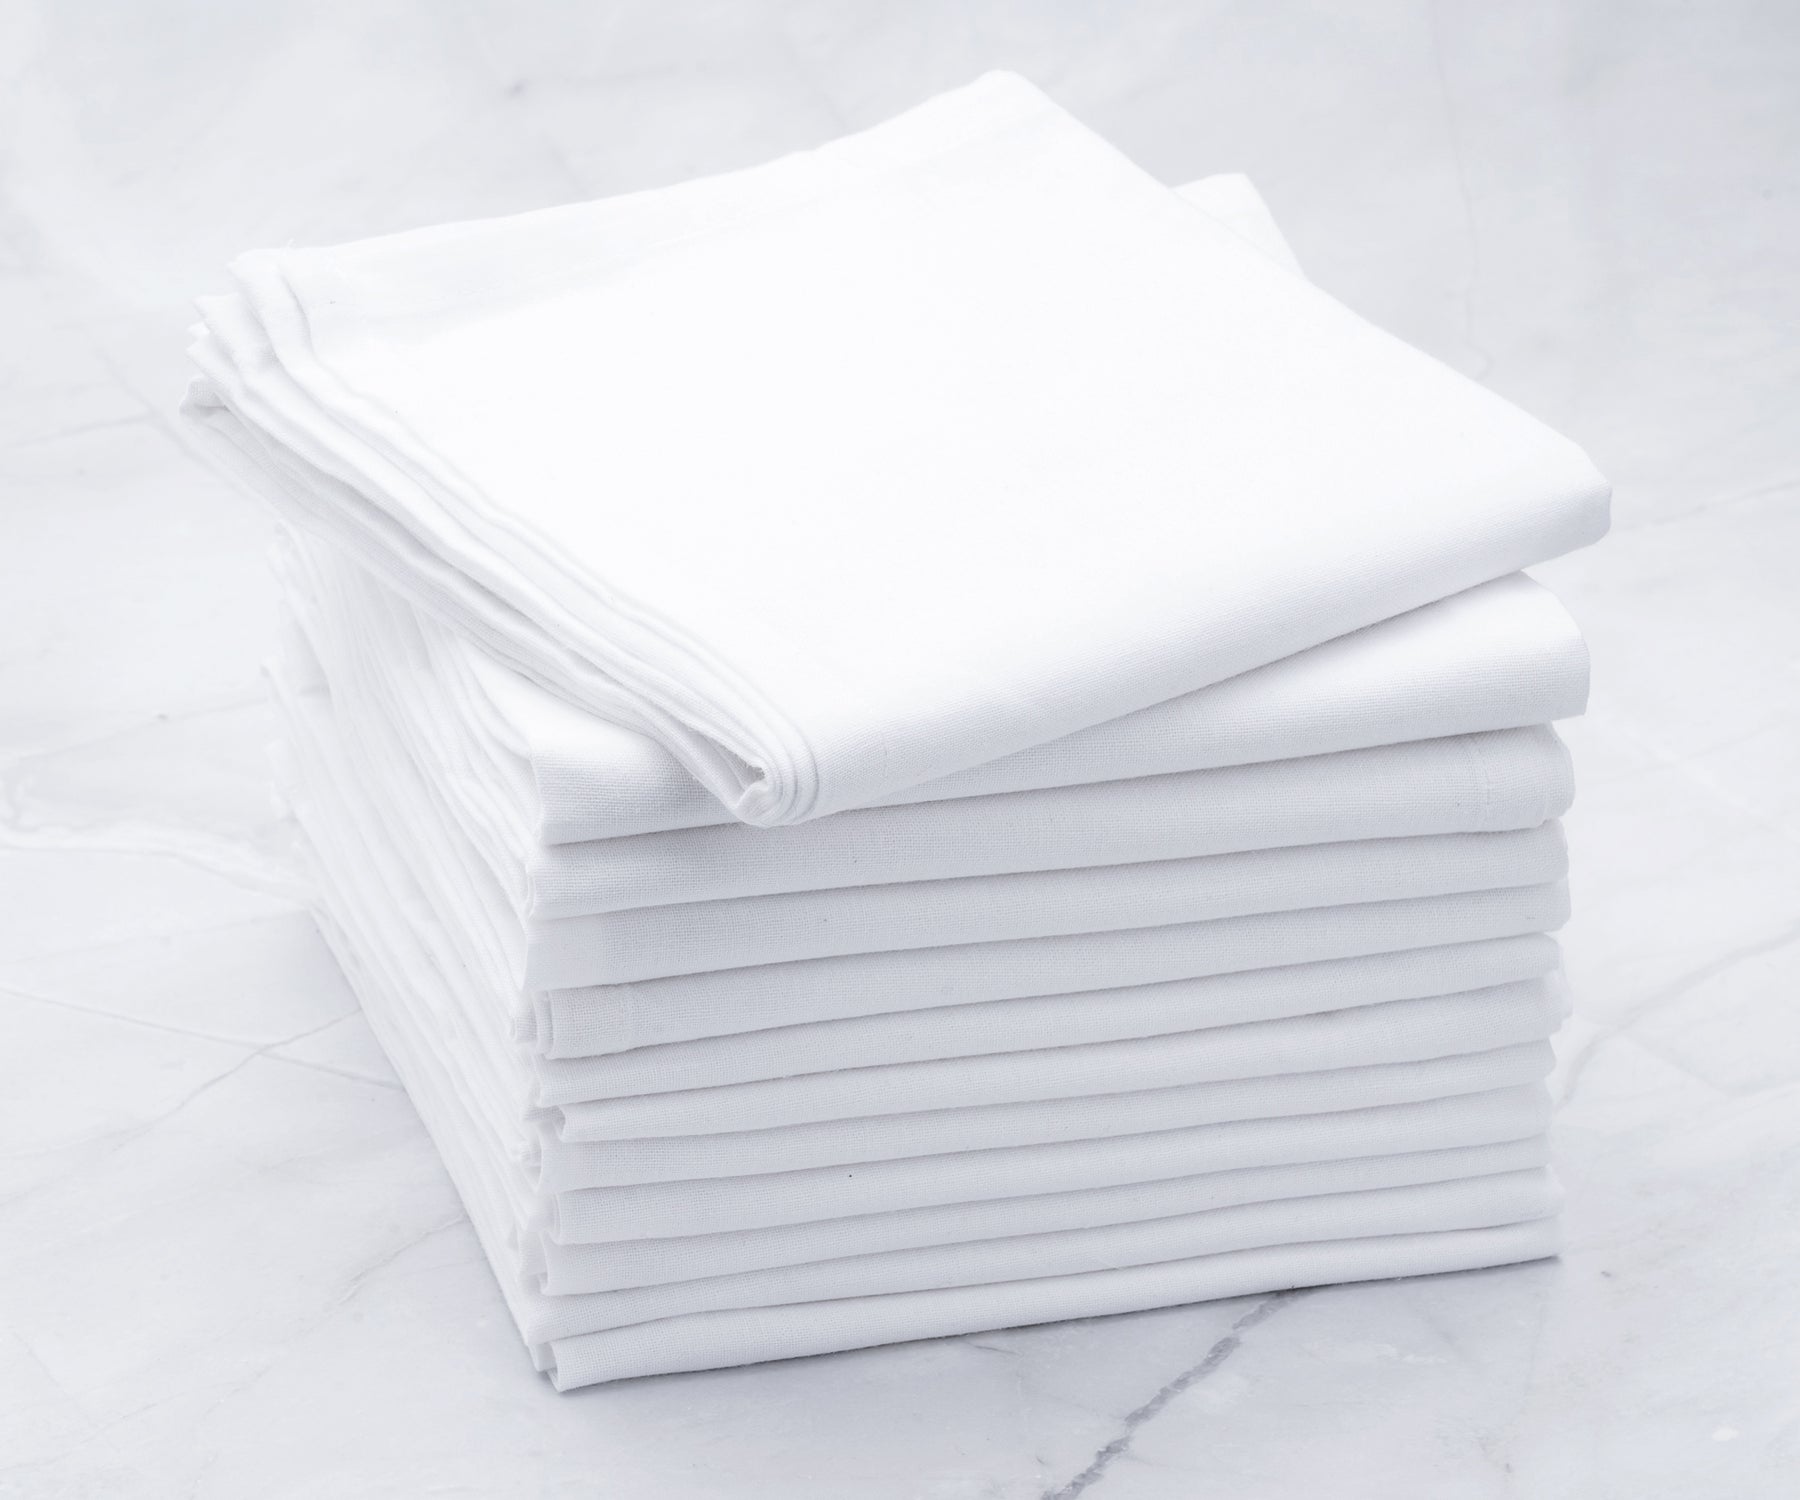 All Cotton and Linen Kitchen Towels - Flour Sack Towels - Grain Sack Dish Towels Set of 12, White, Size: 28 x 28